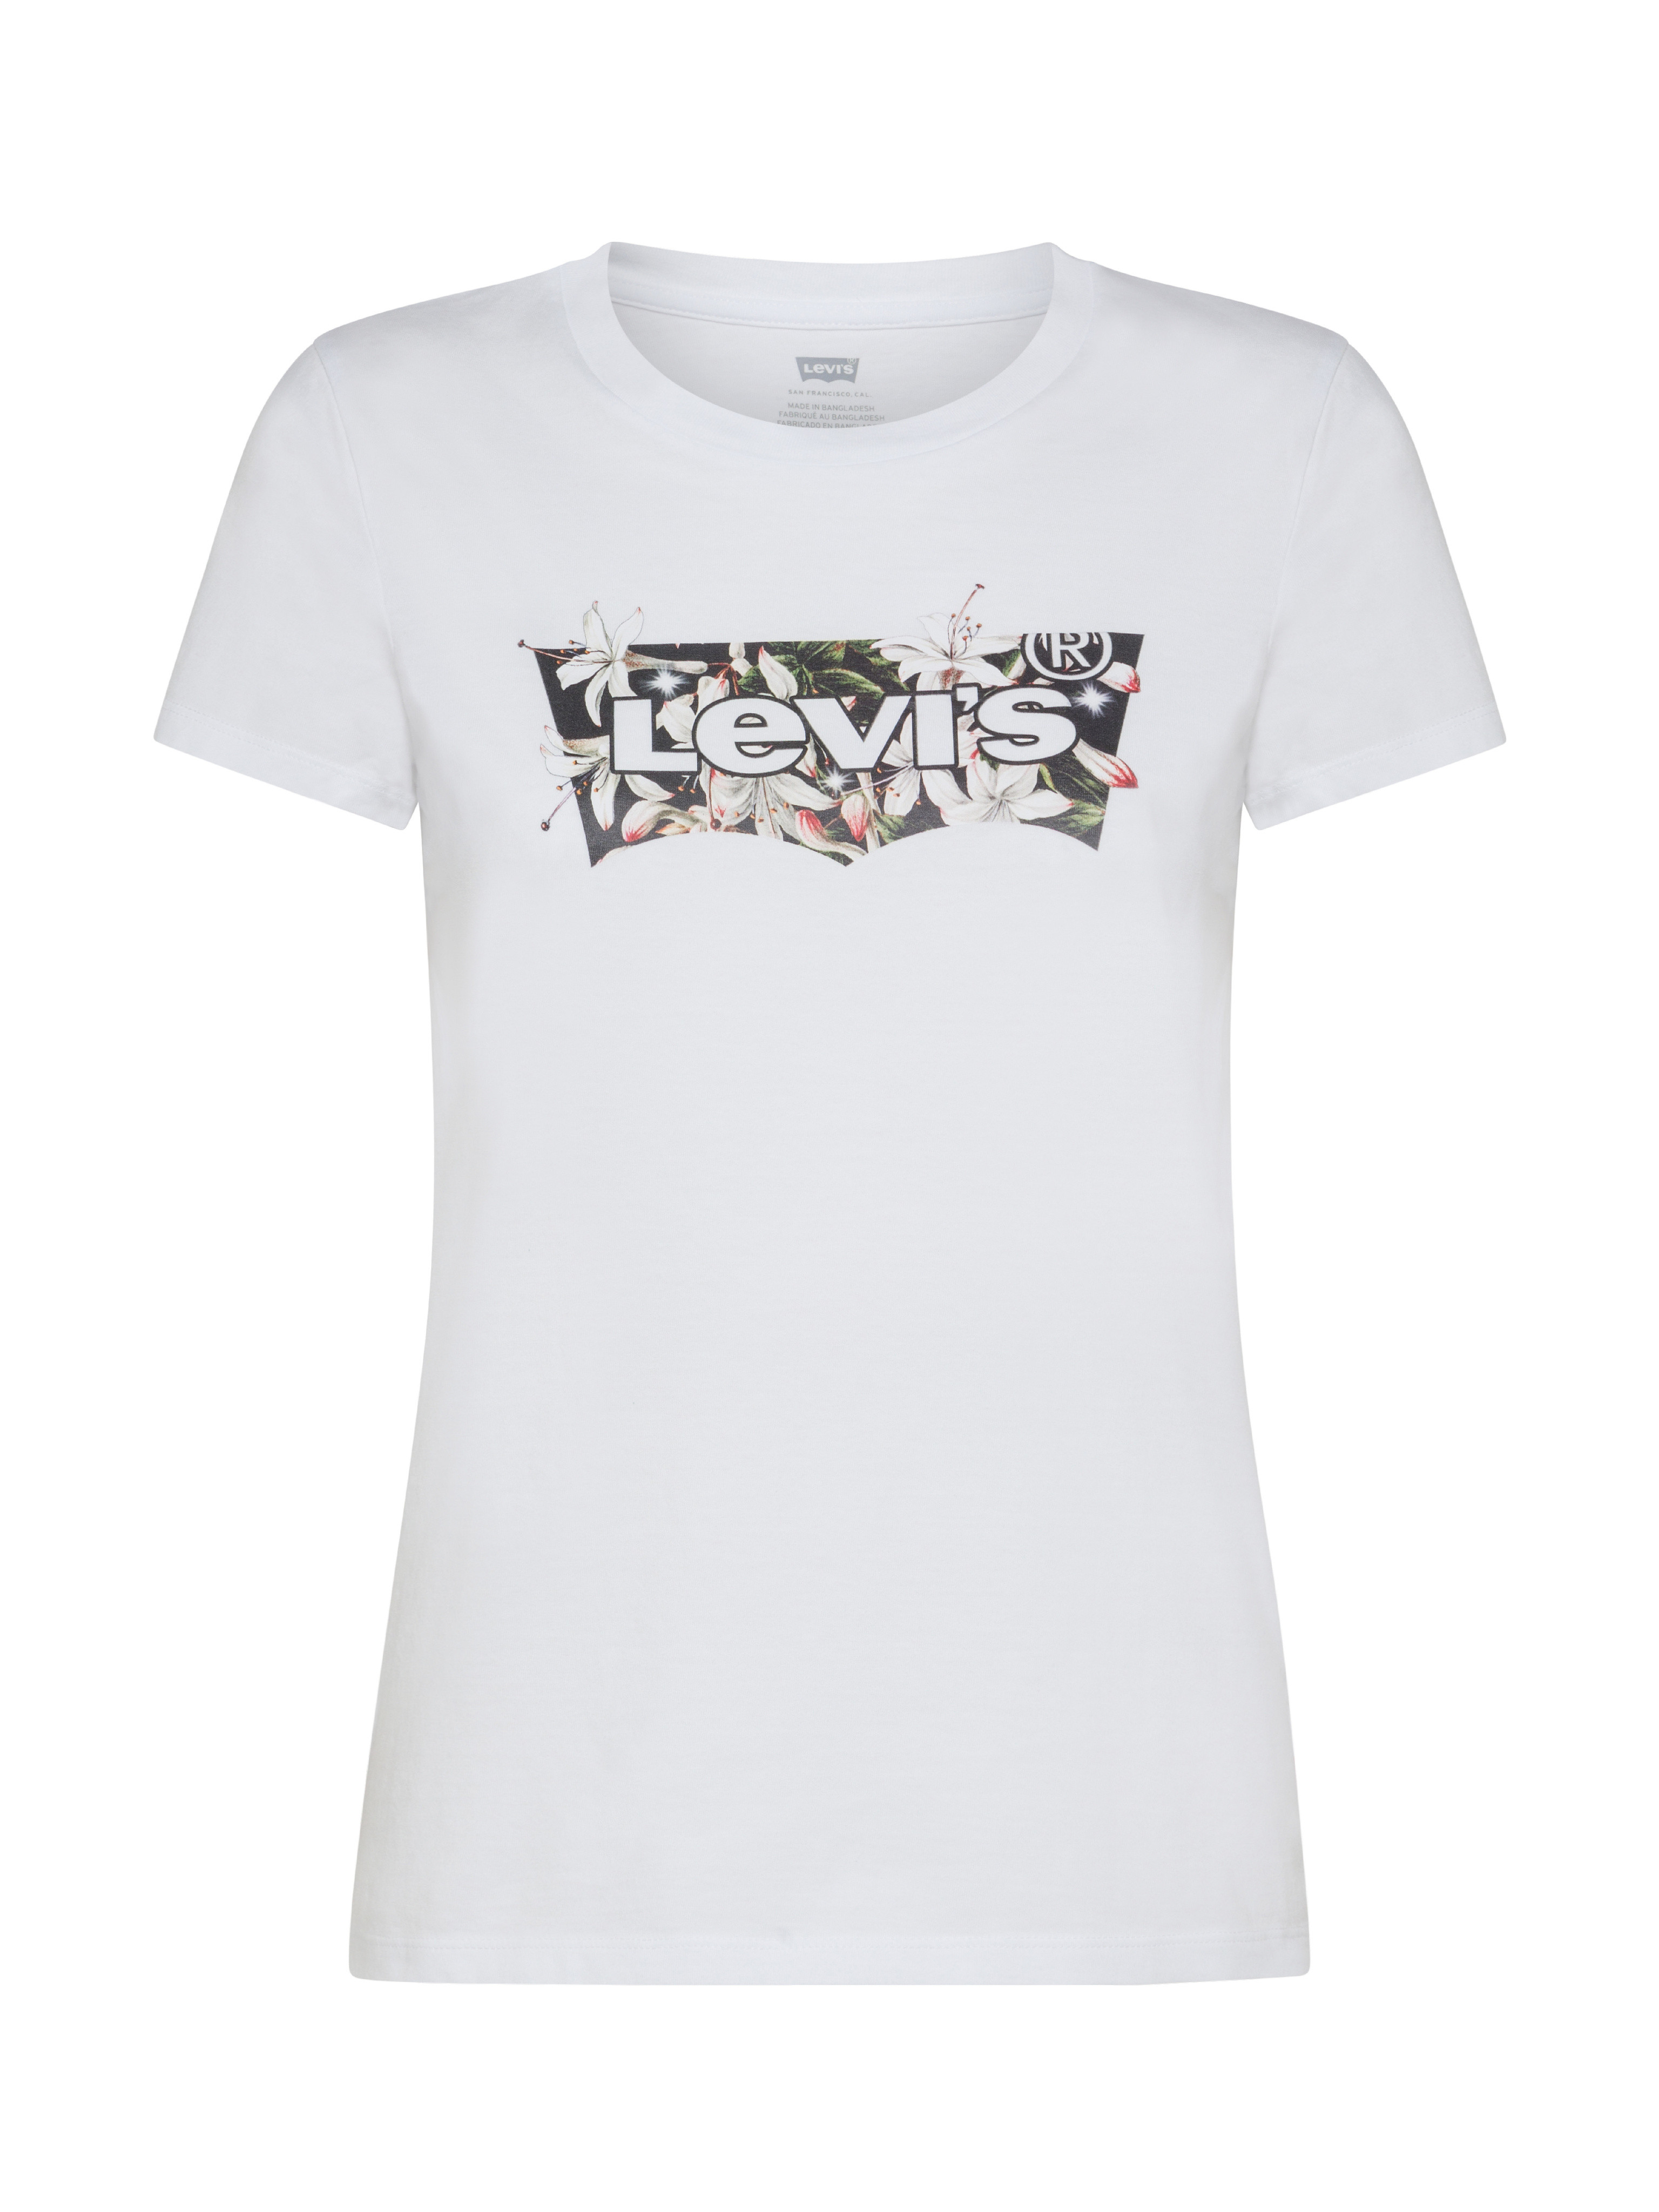 Levi's - Floral Logo T-Shirt, White, large image number 0